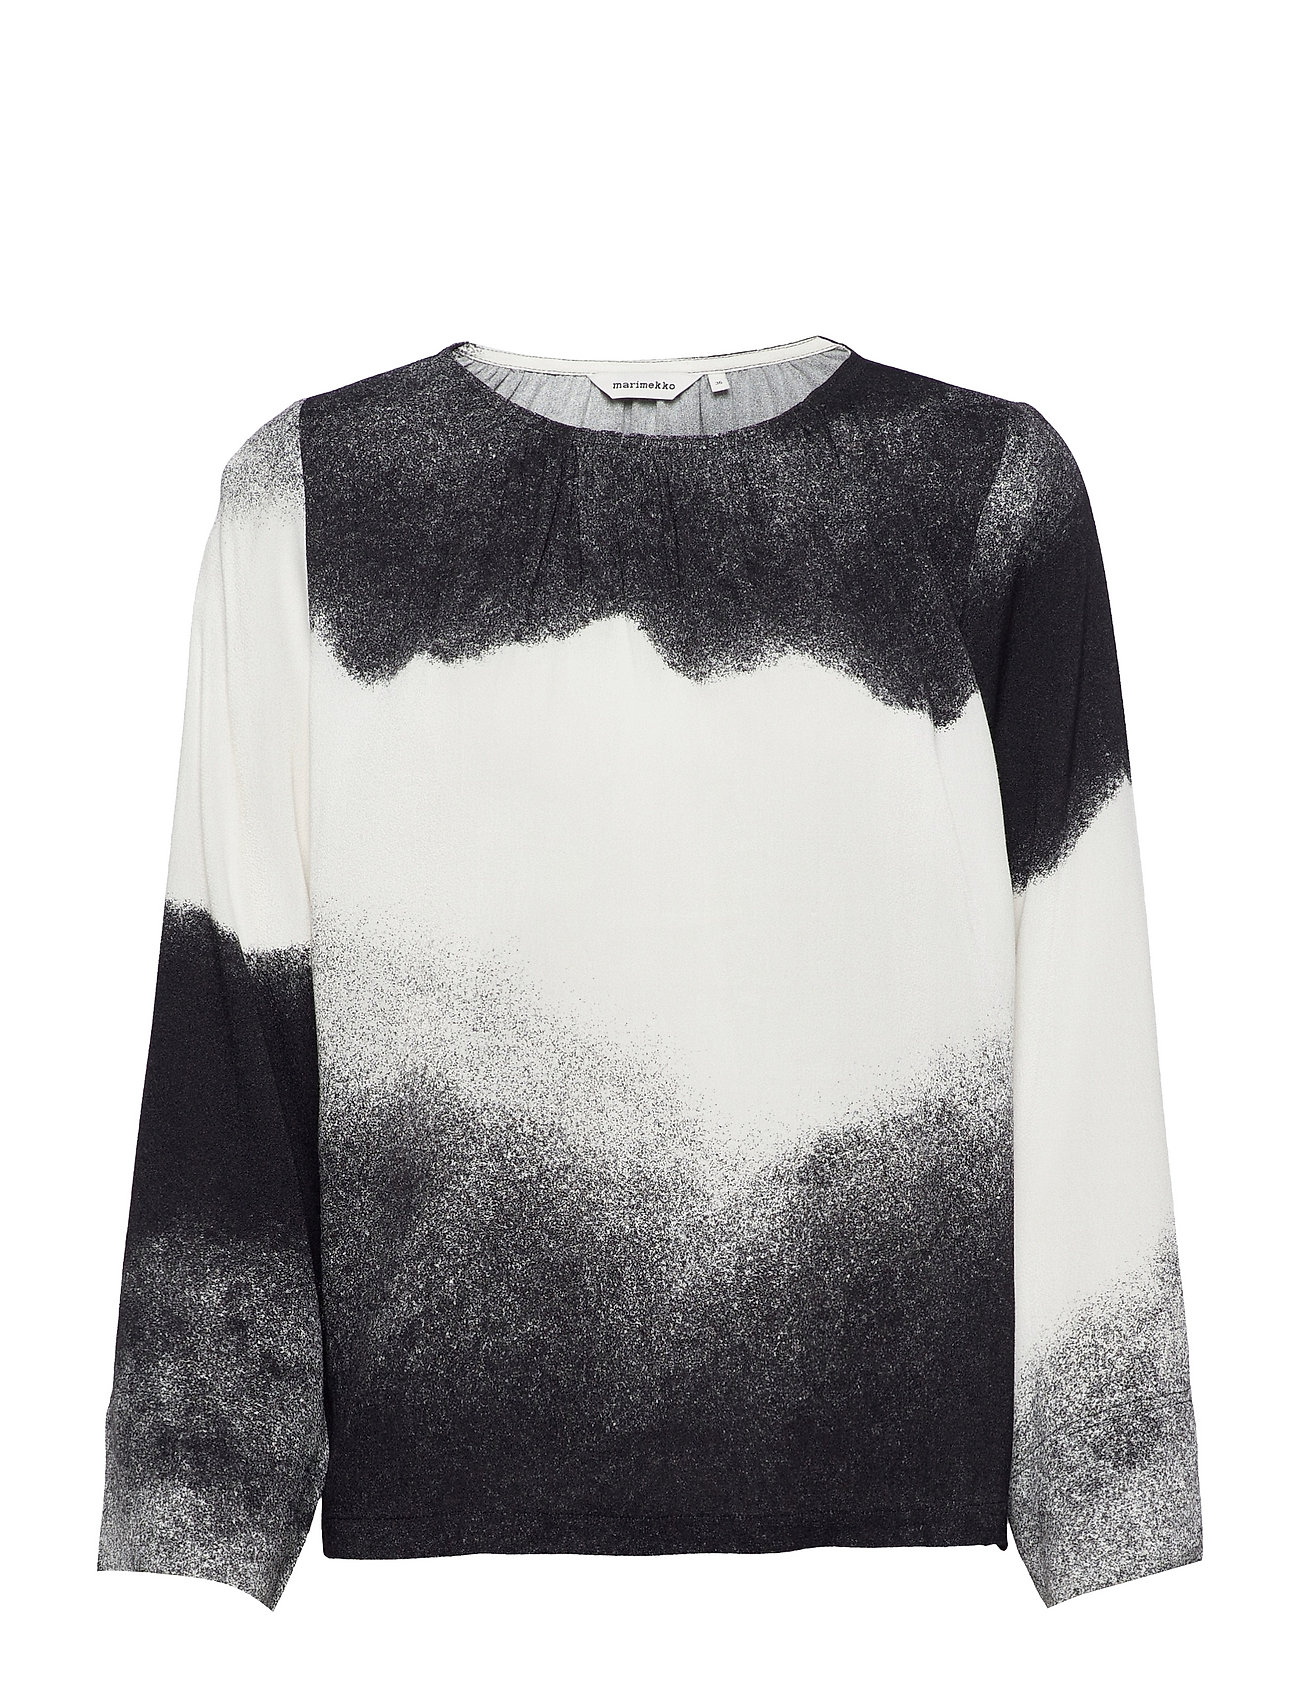 Polulla Pilvi Shirt T-shirts & Tops Long-sleeved Musta Marimekko